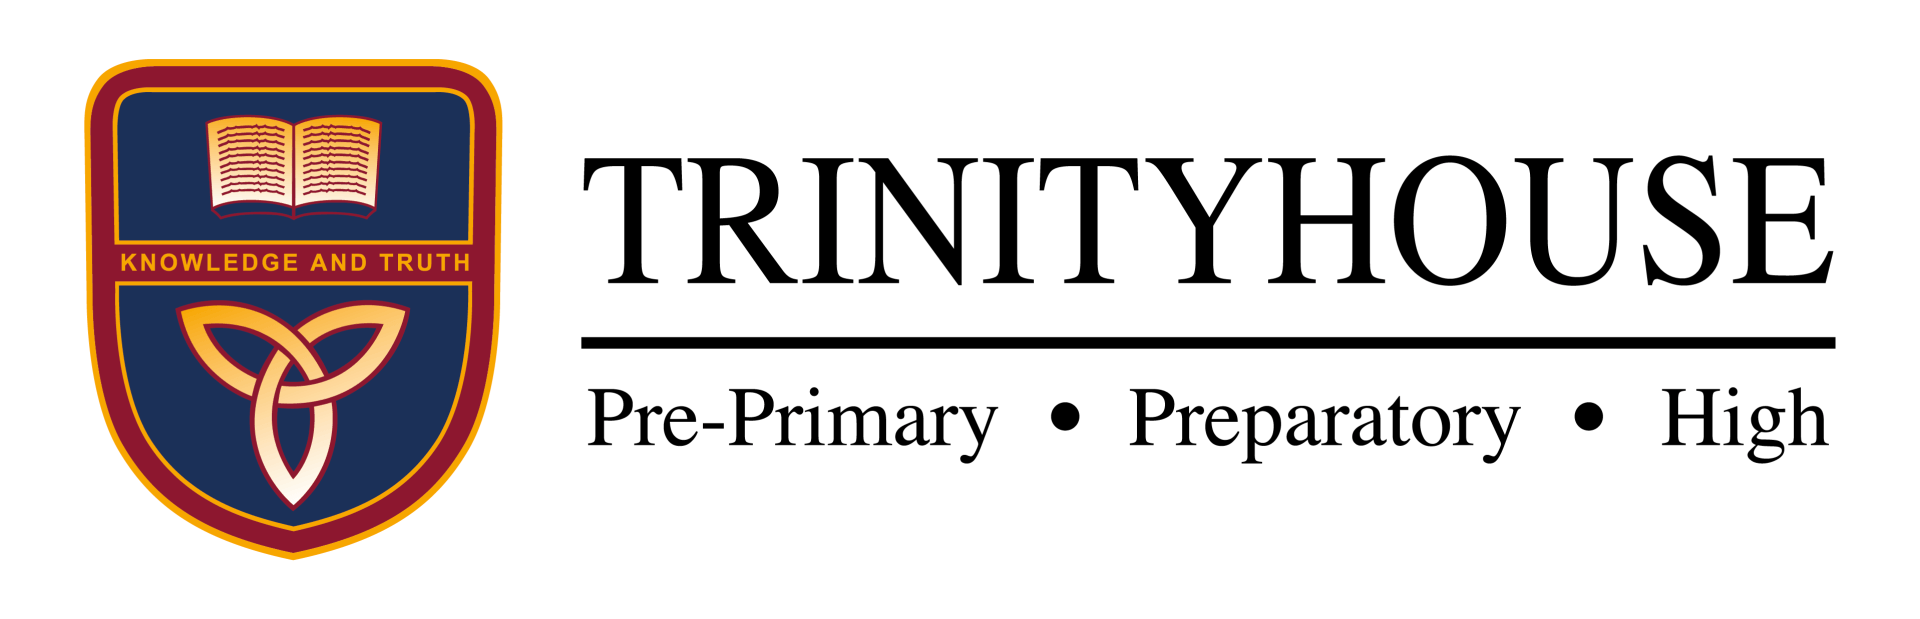 trinityhouse logo